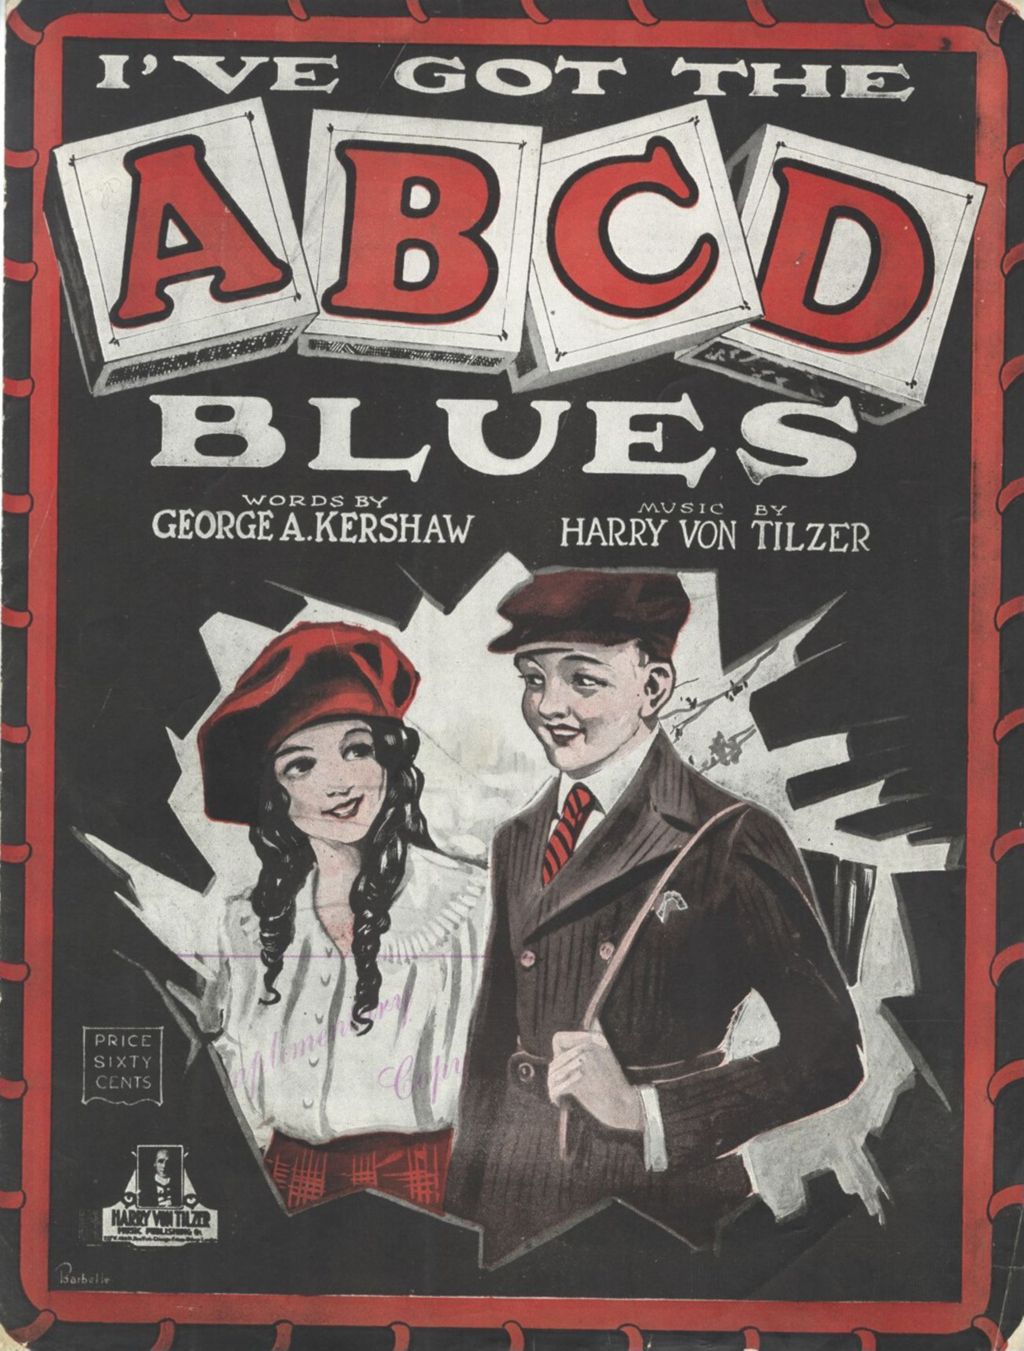 Miniature of A.B.C.D. Blues